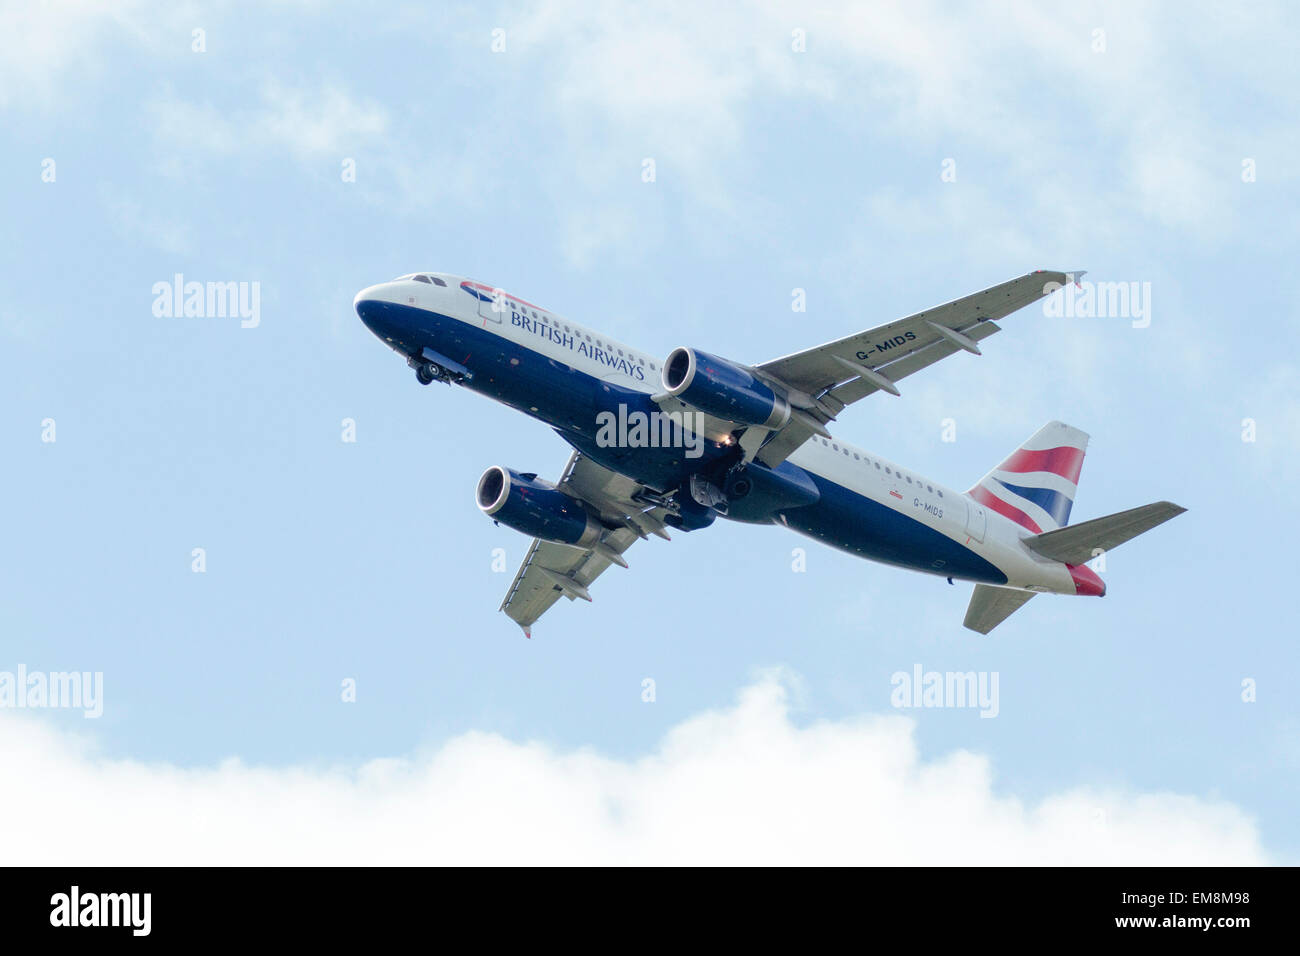 British Airways G-MIDS Airbus A320 Stock Photo